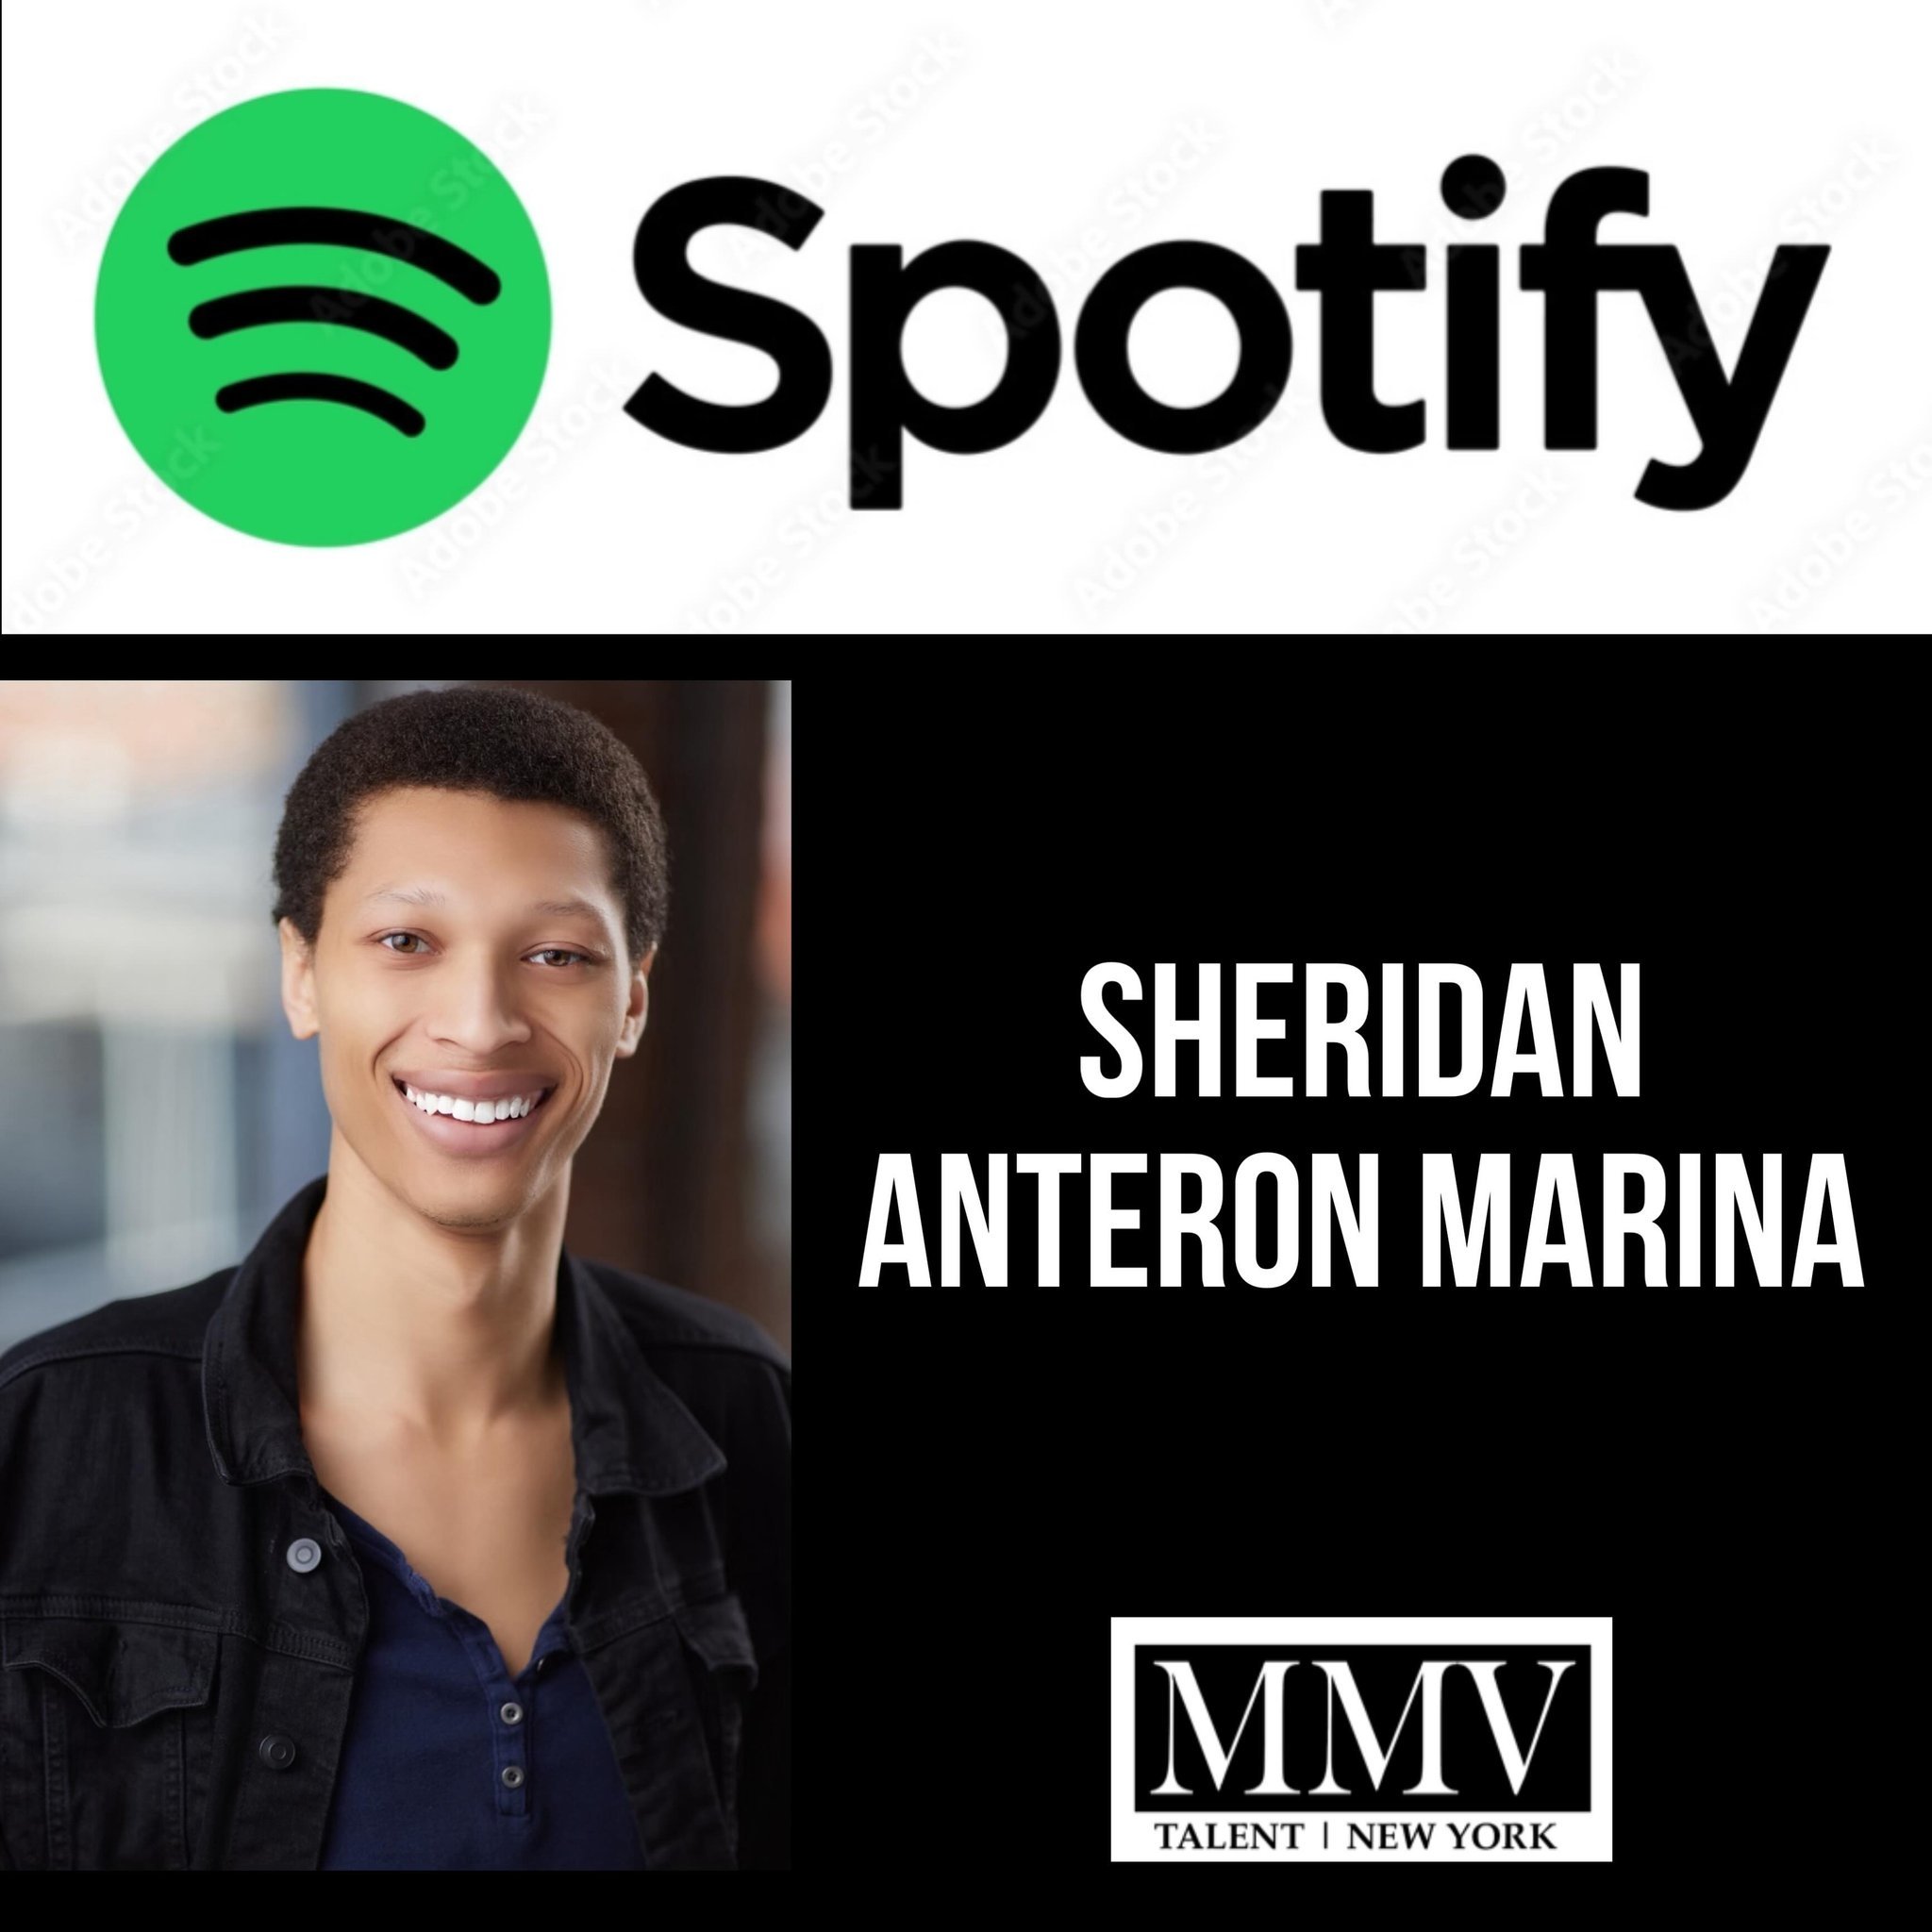 COMMERCIAL: Sheridan Anteron Marina for Spotify! Now running on socials! 🤩
@ssheeriidaan 

#mmvtalent